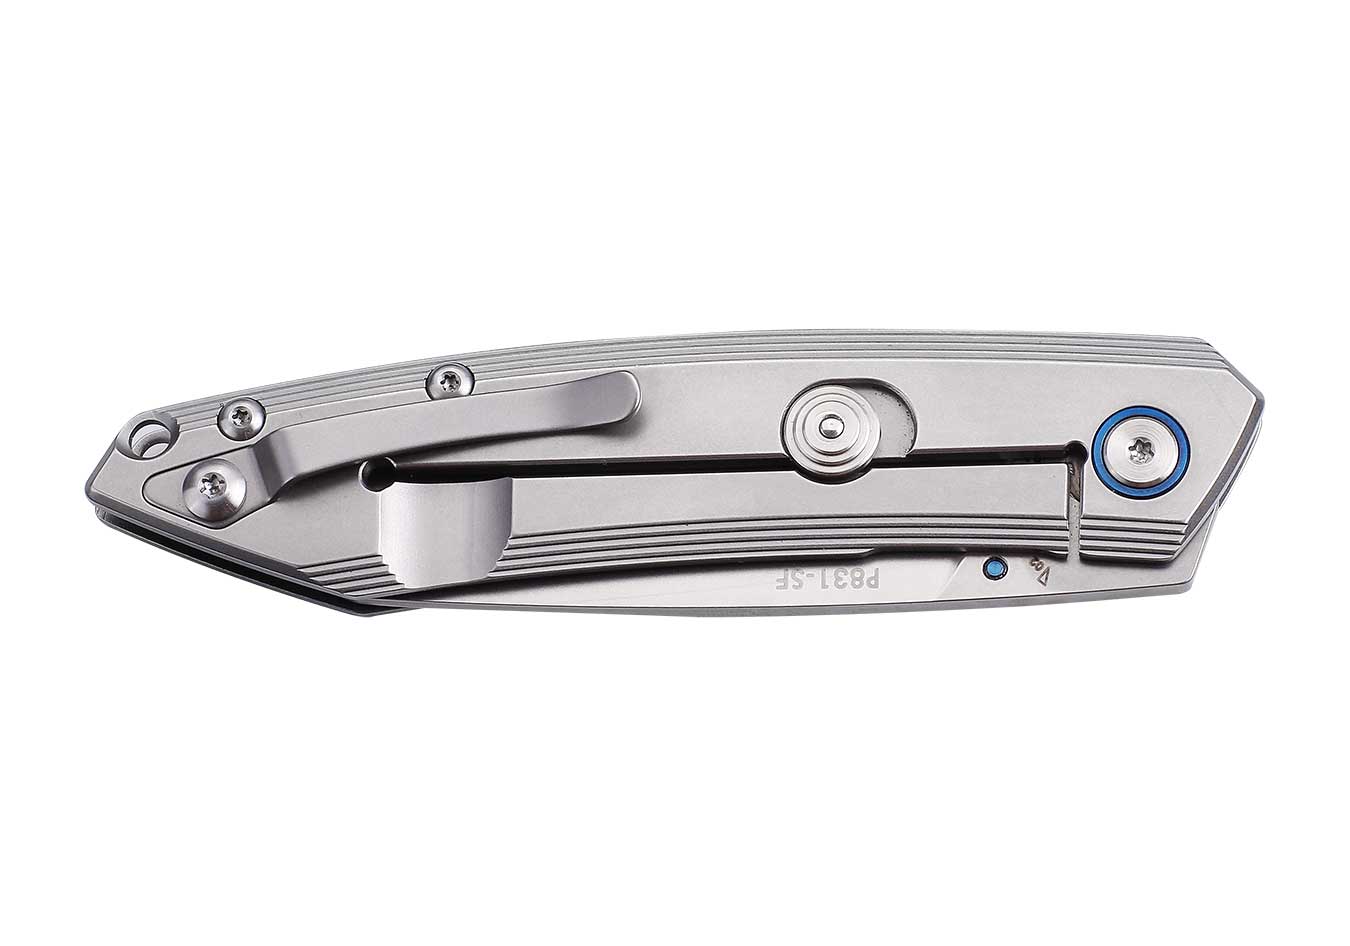 Ruike P831-SF Folding Knife – Silver | Ruike